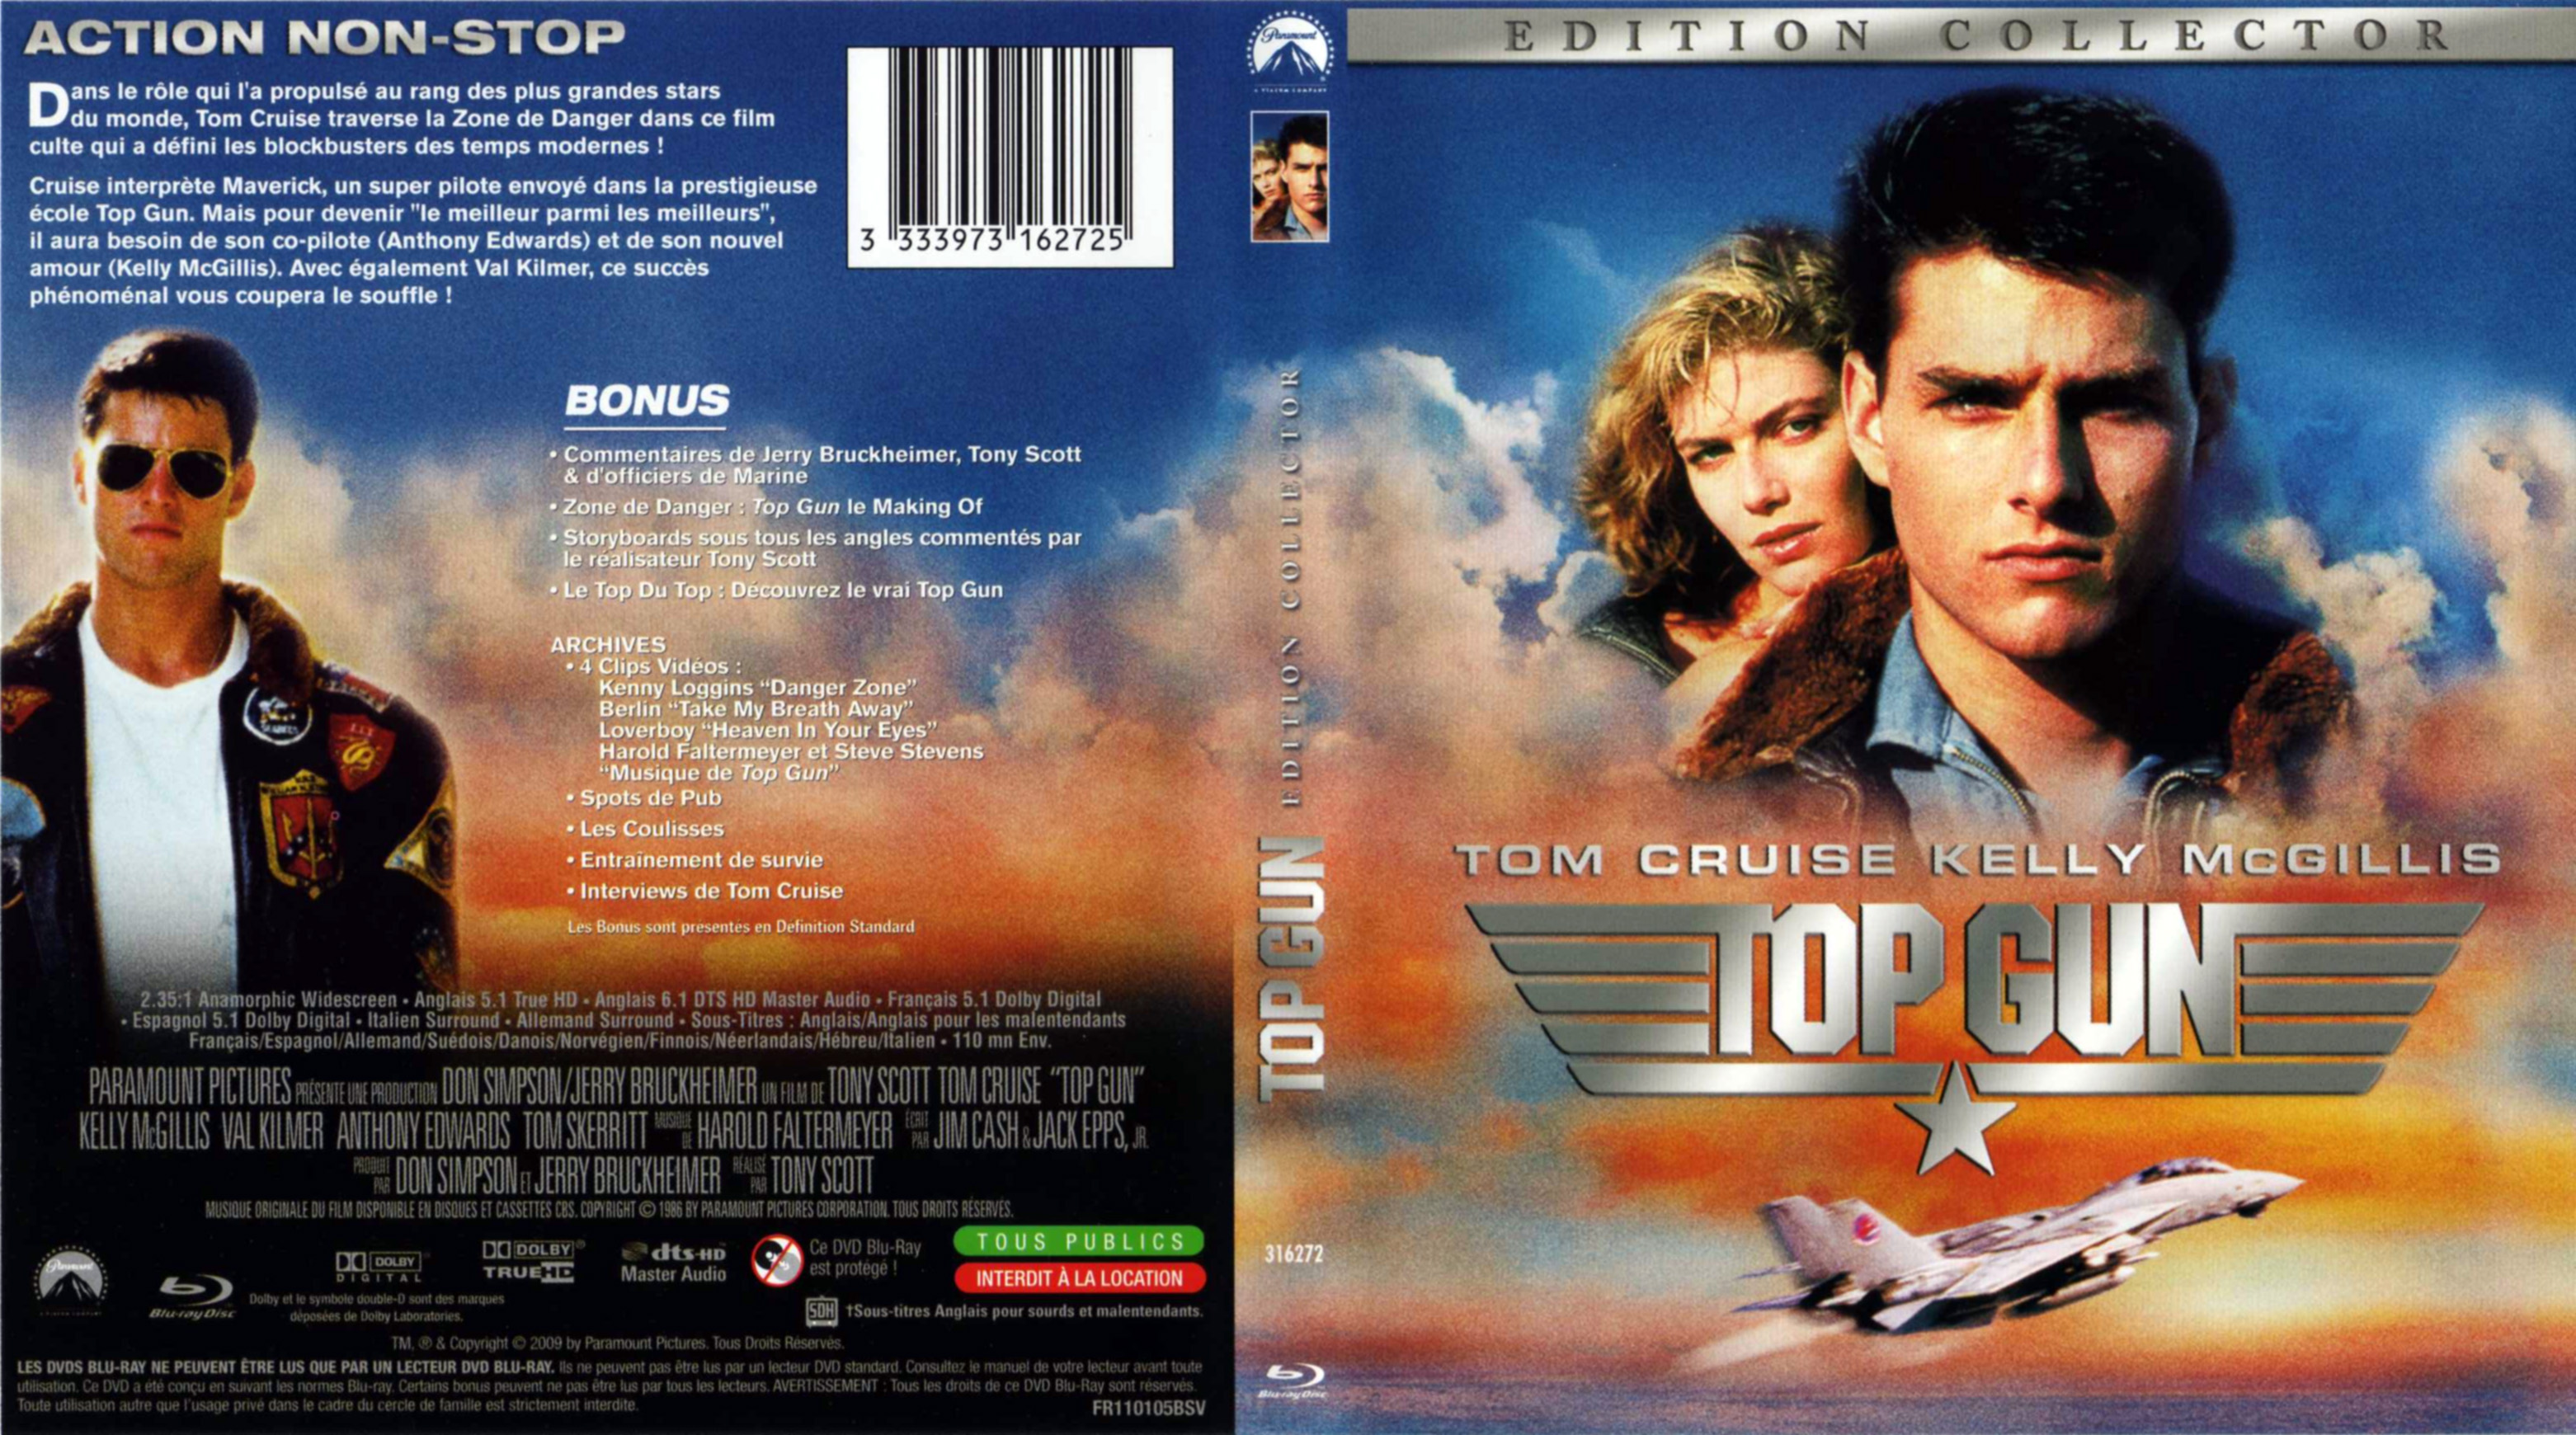 Top Gun: Ases Indomaveis [1986]